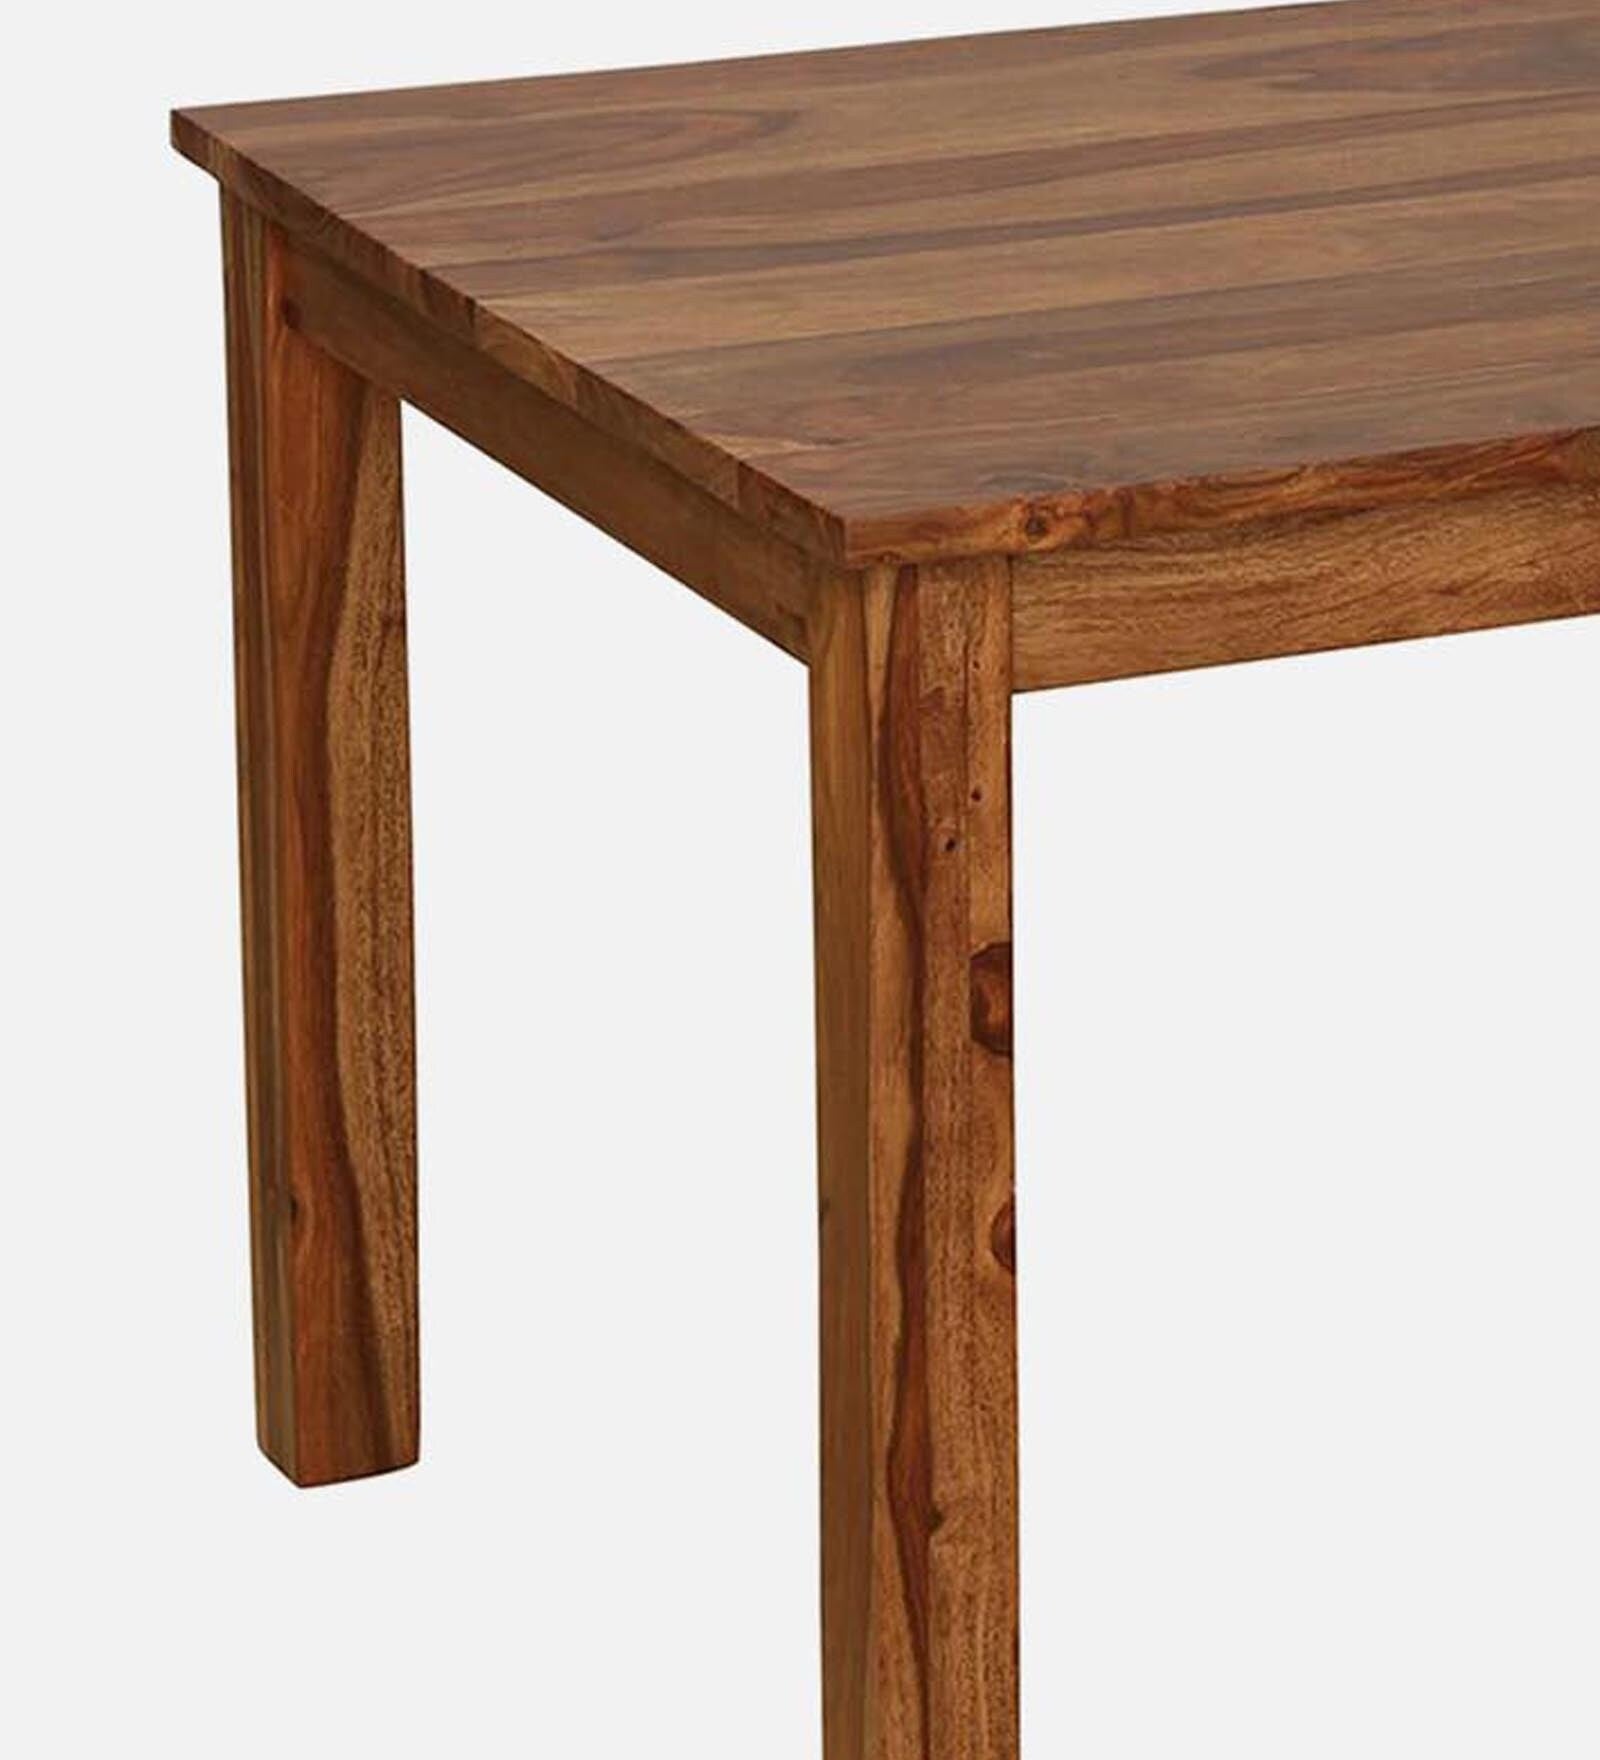 Oslo Solid Wood 4 Seater Dining Table In Rustic Teak Finish By Rajwada - Rajwada Furnish